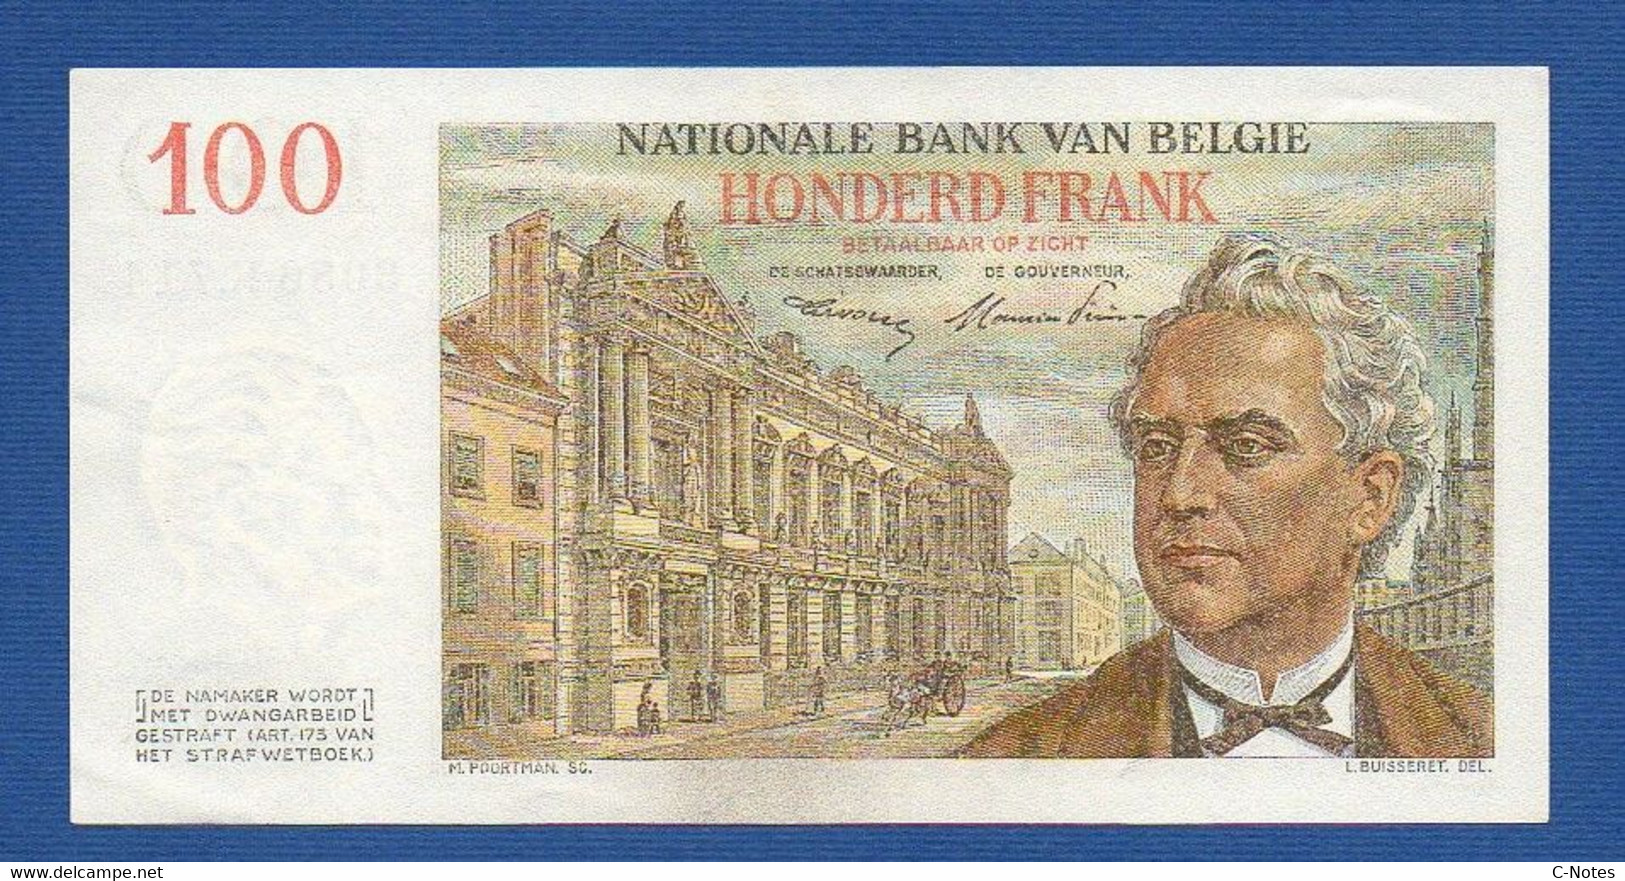 BELGIUM - P.129a - 100 Francs 15.01.1953 AUNC, Serie 3086.R.714 - 100 Francs